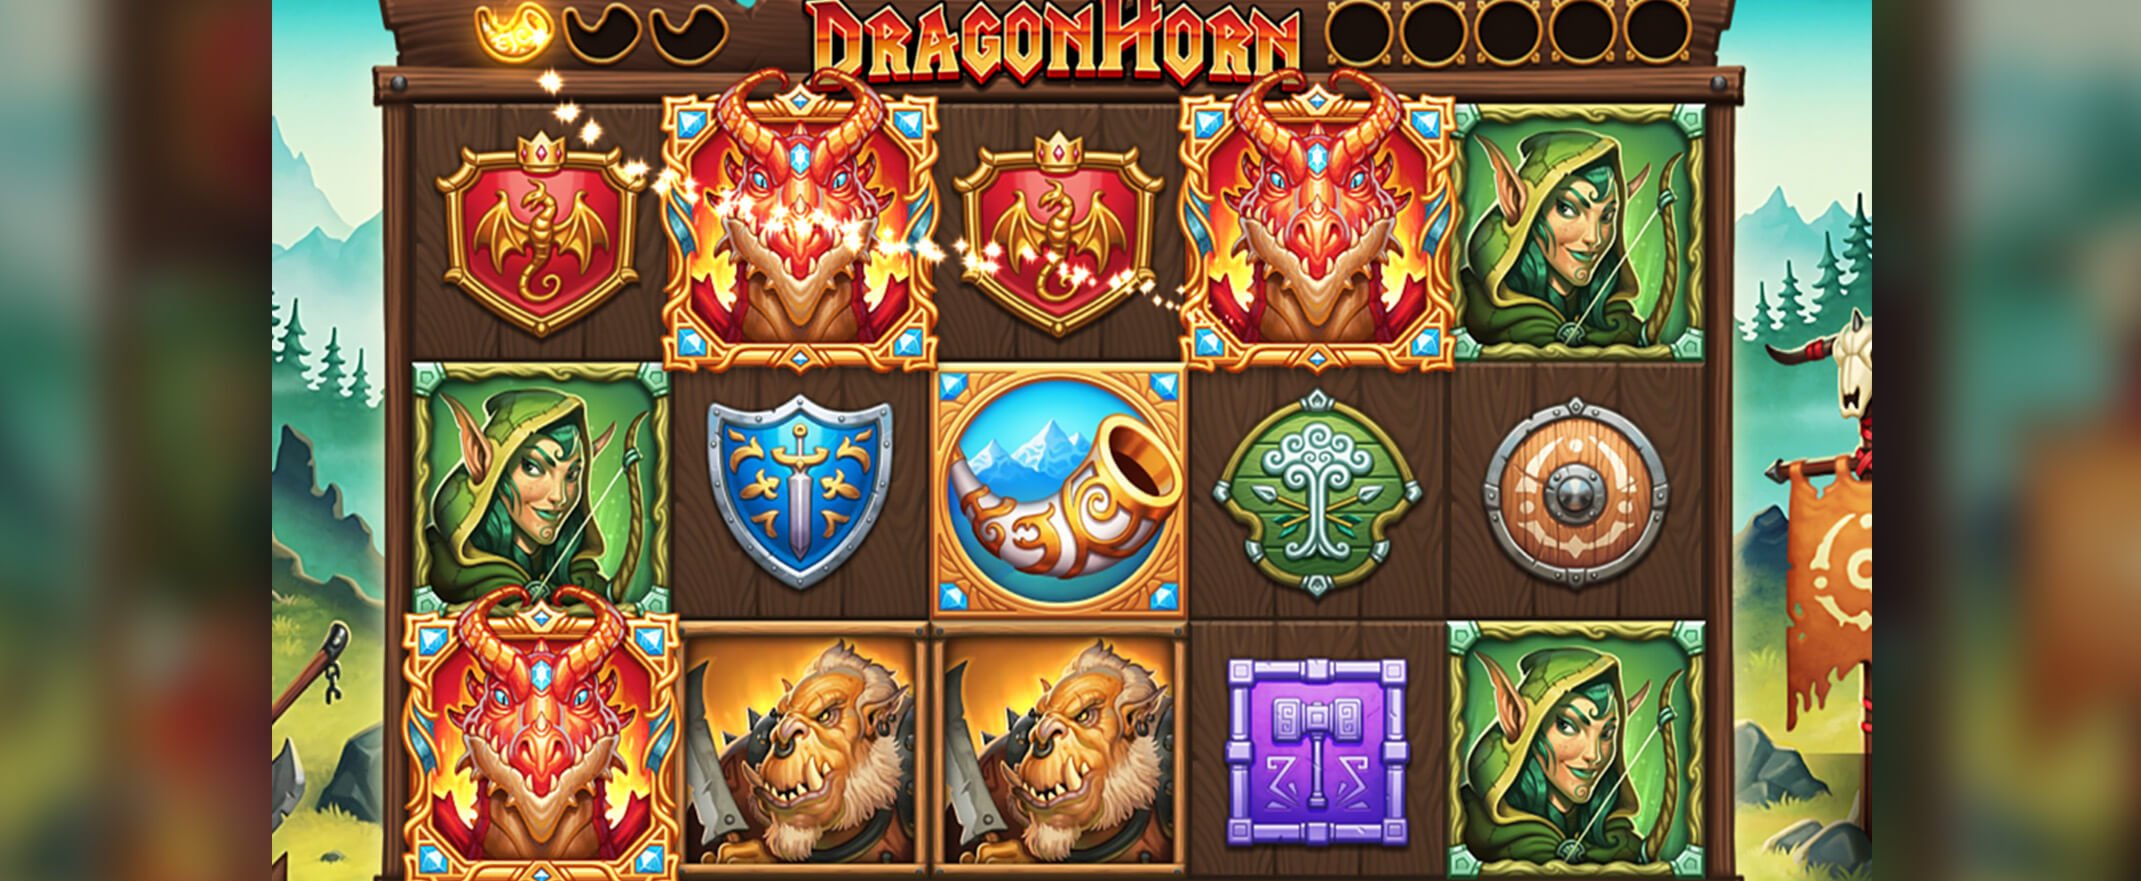 Dragonhorn slot game Screenshot